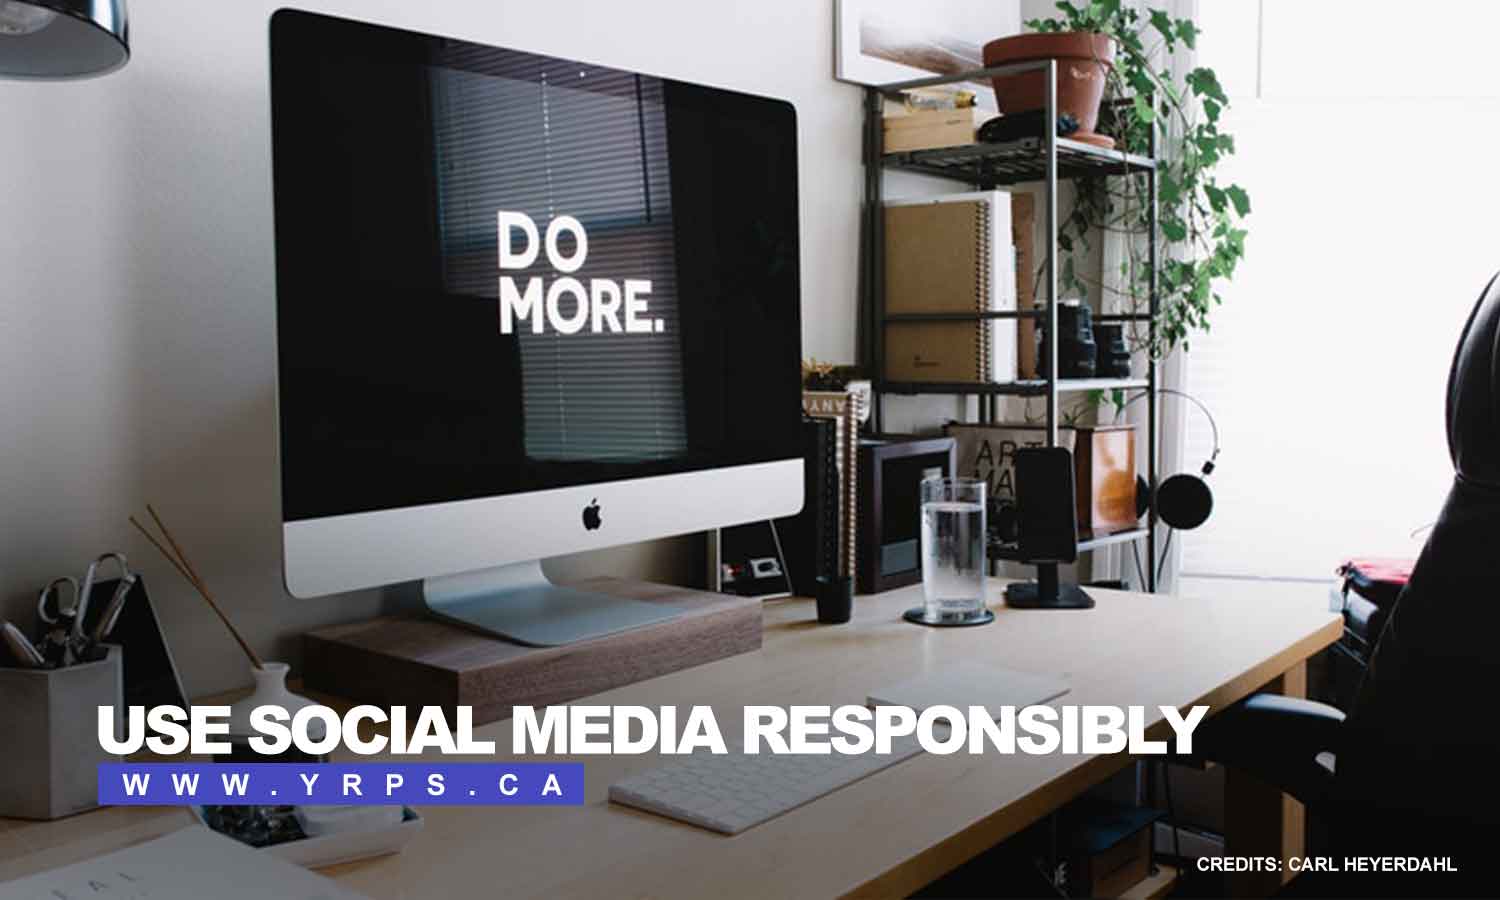 Use social media responsibly